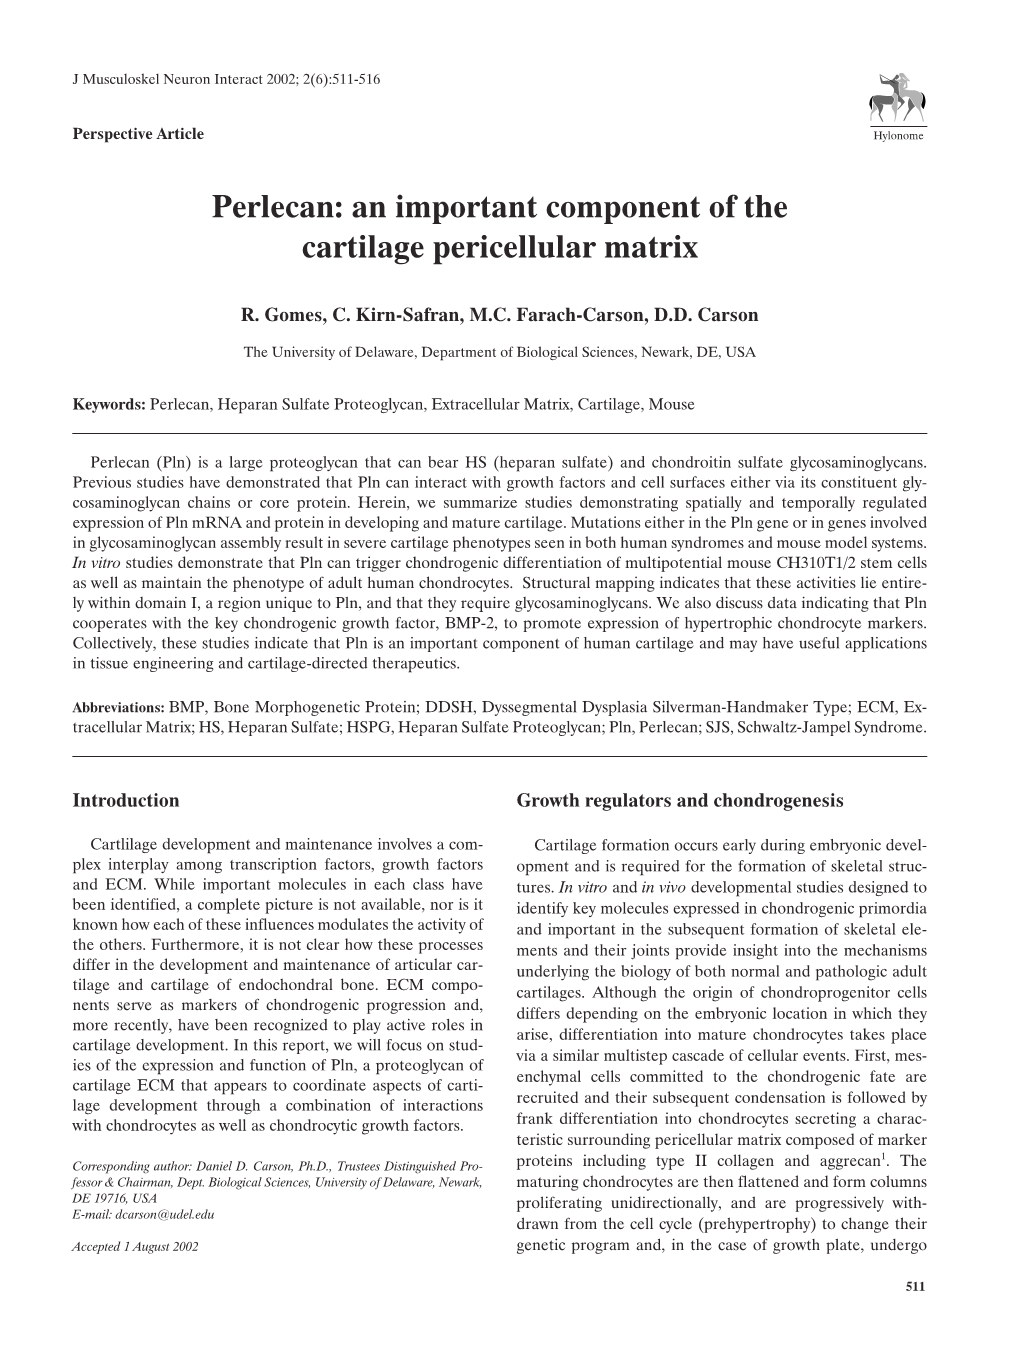 Perlecan: an Important Component of the Cartilage Pericellular Matrix